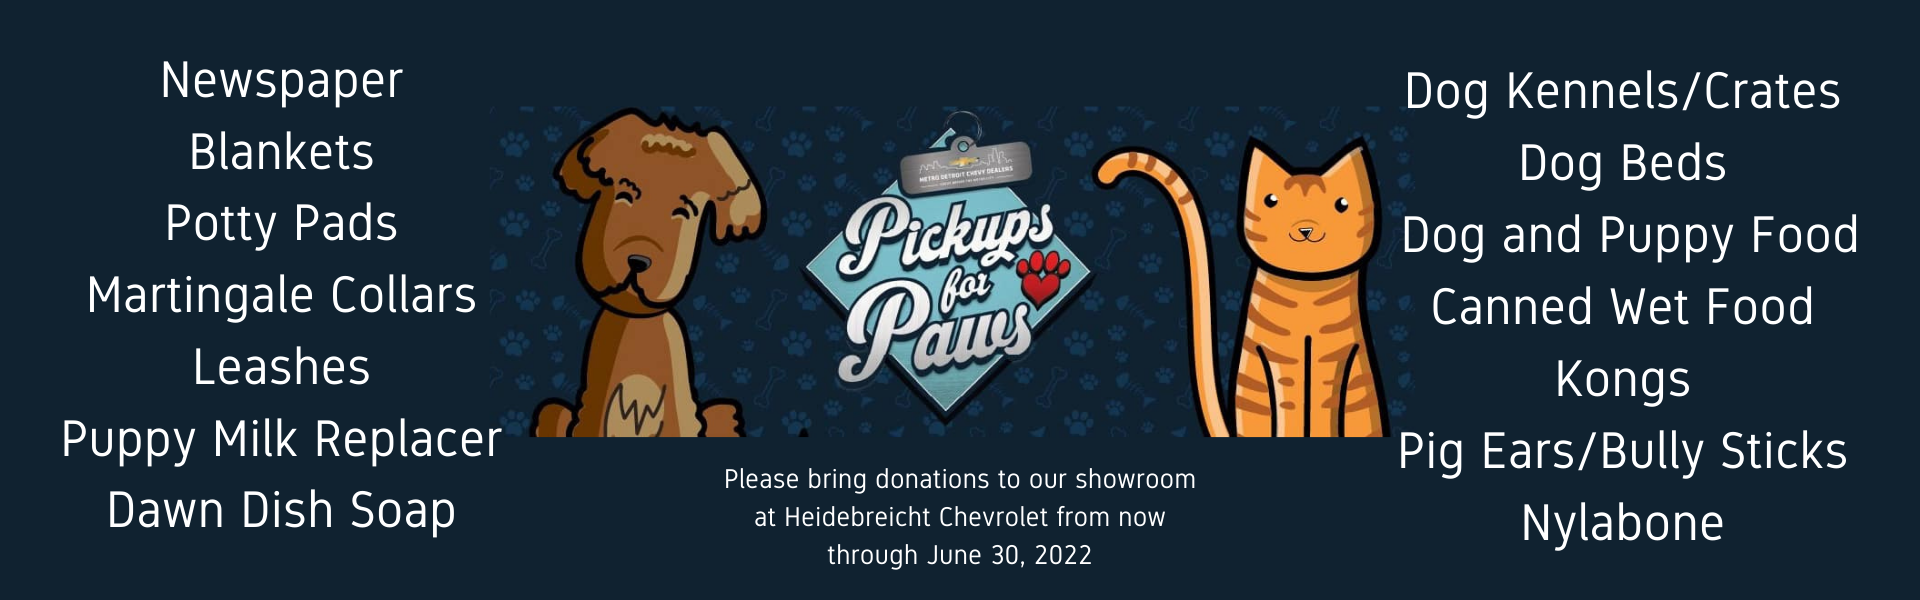 2022 Pickups for Paws donation list | Heidebreicht Chevrolet